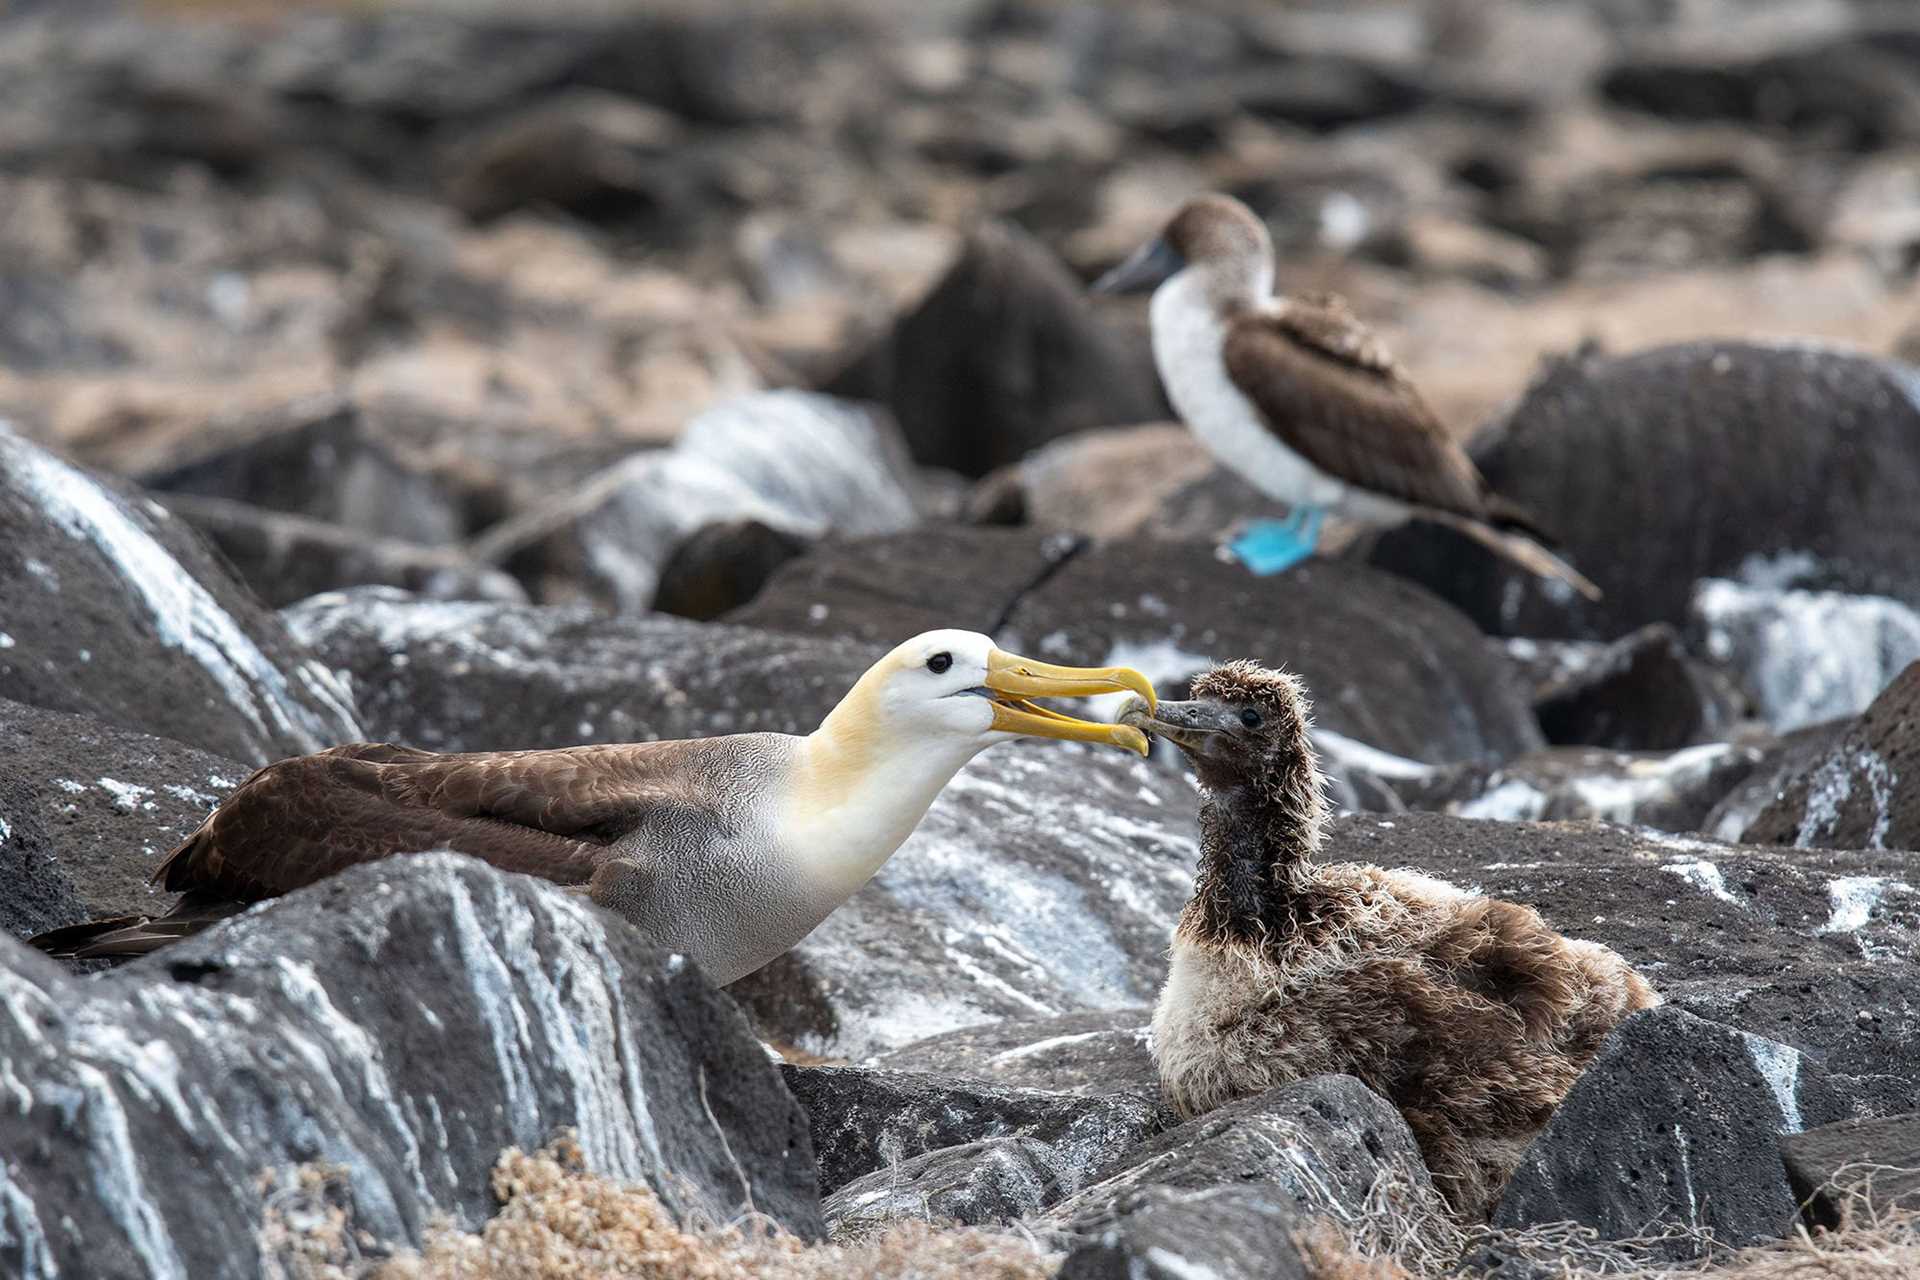 waved albatross feeding its chick